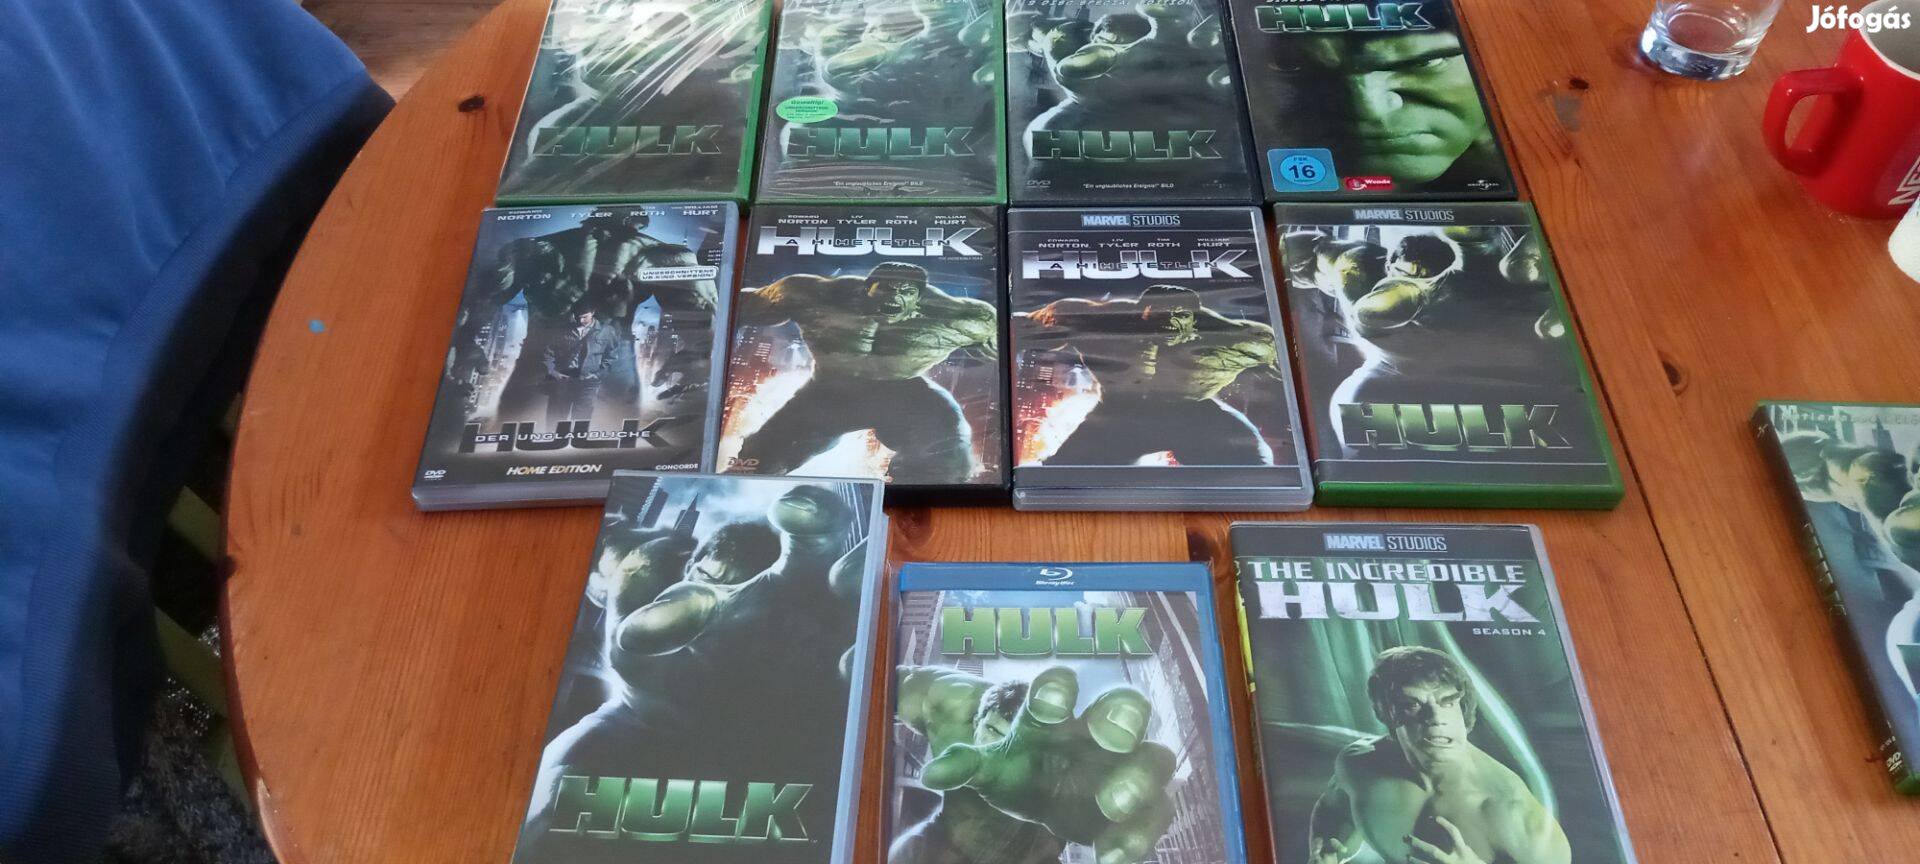 Marvel Hulk DVD film